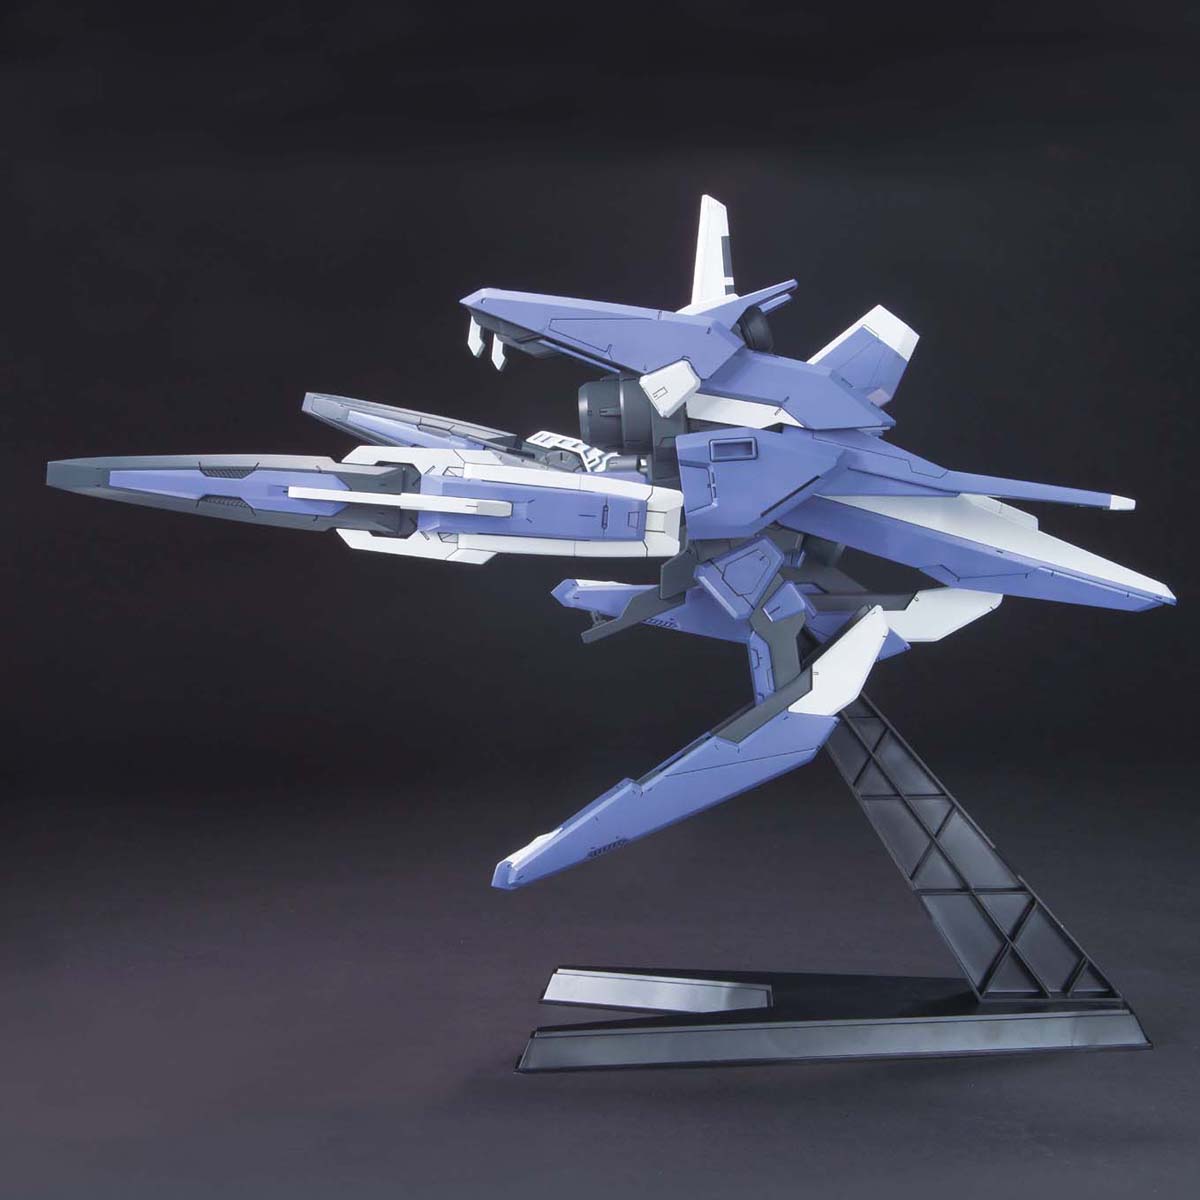 HG00 - GN Arms Type-E + Gundam Exia (Trans-Am Mode)